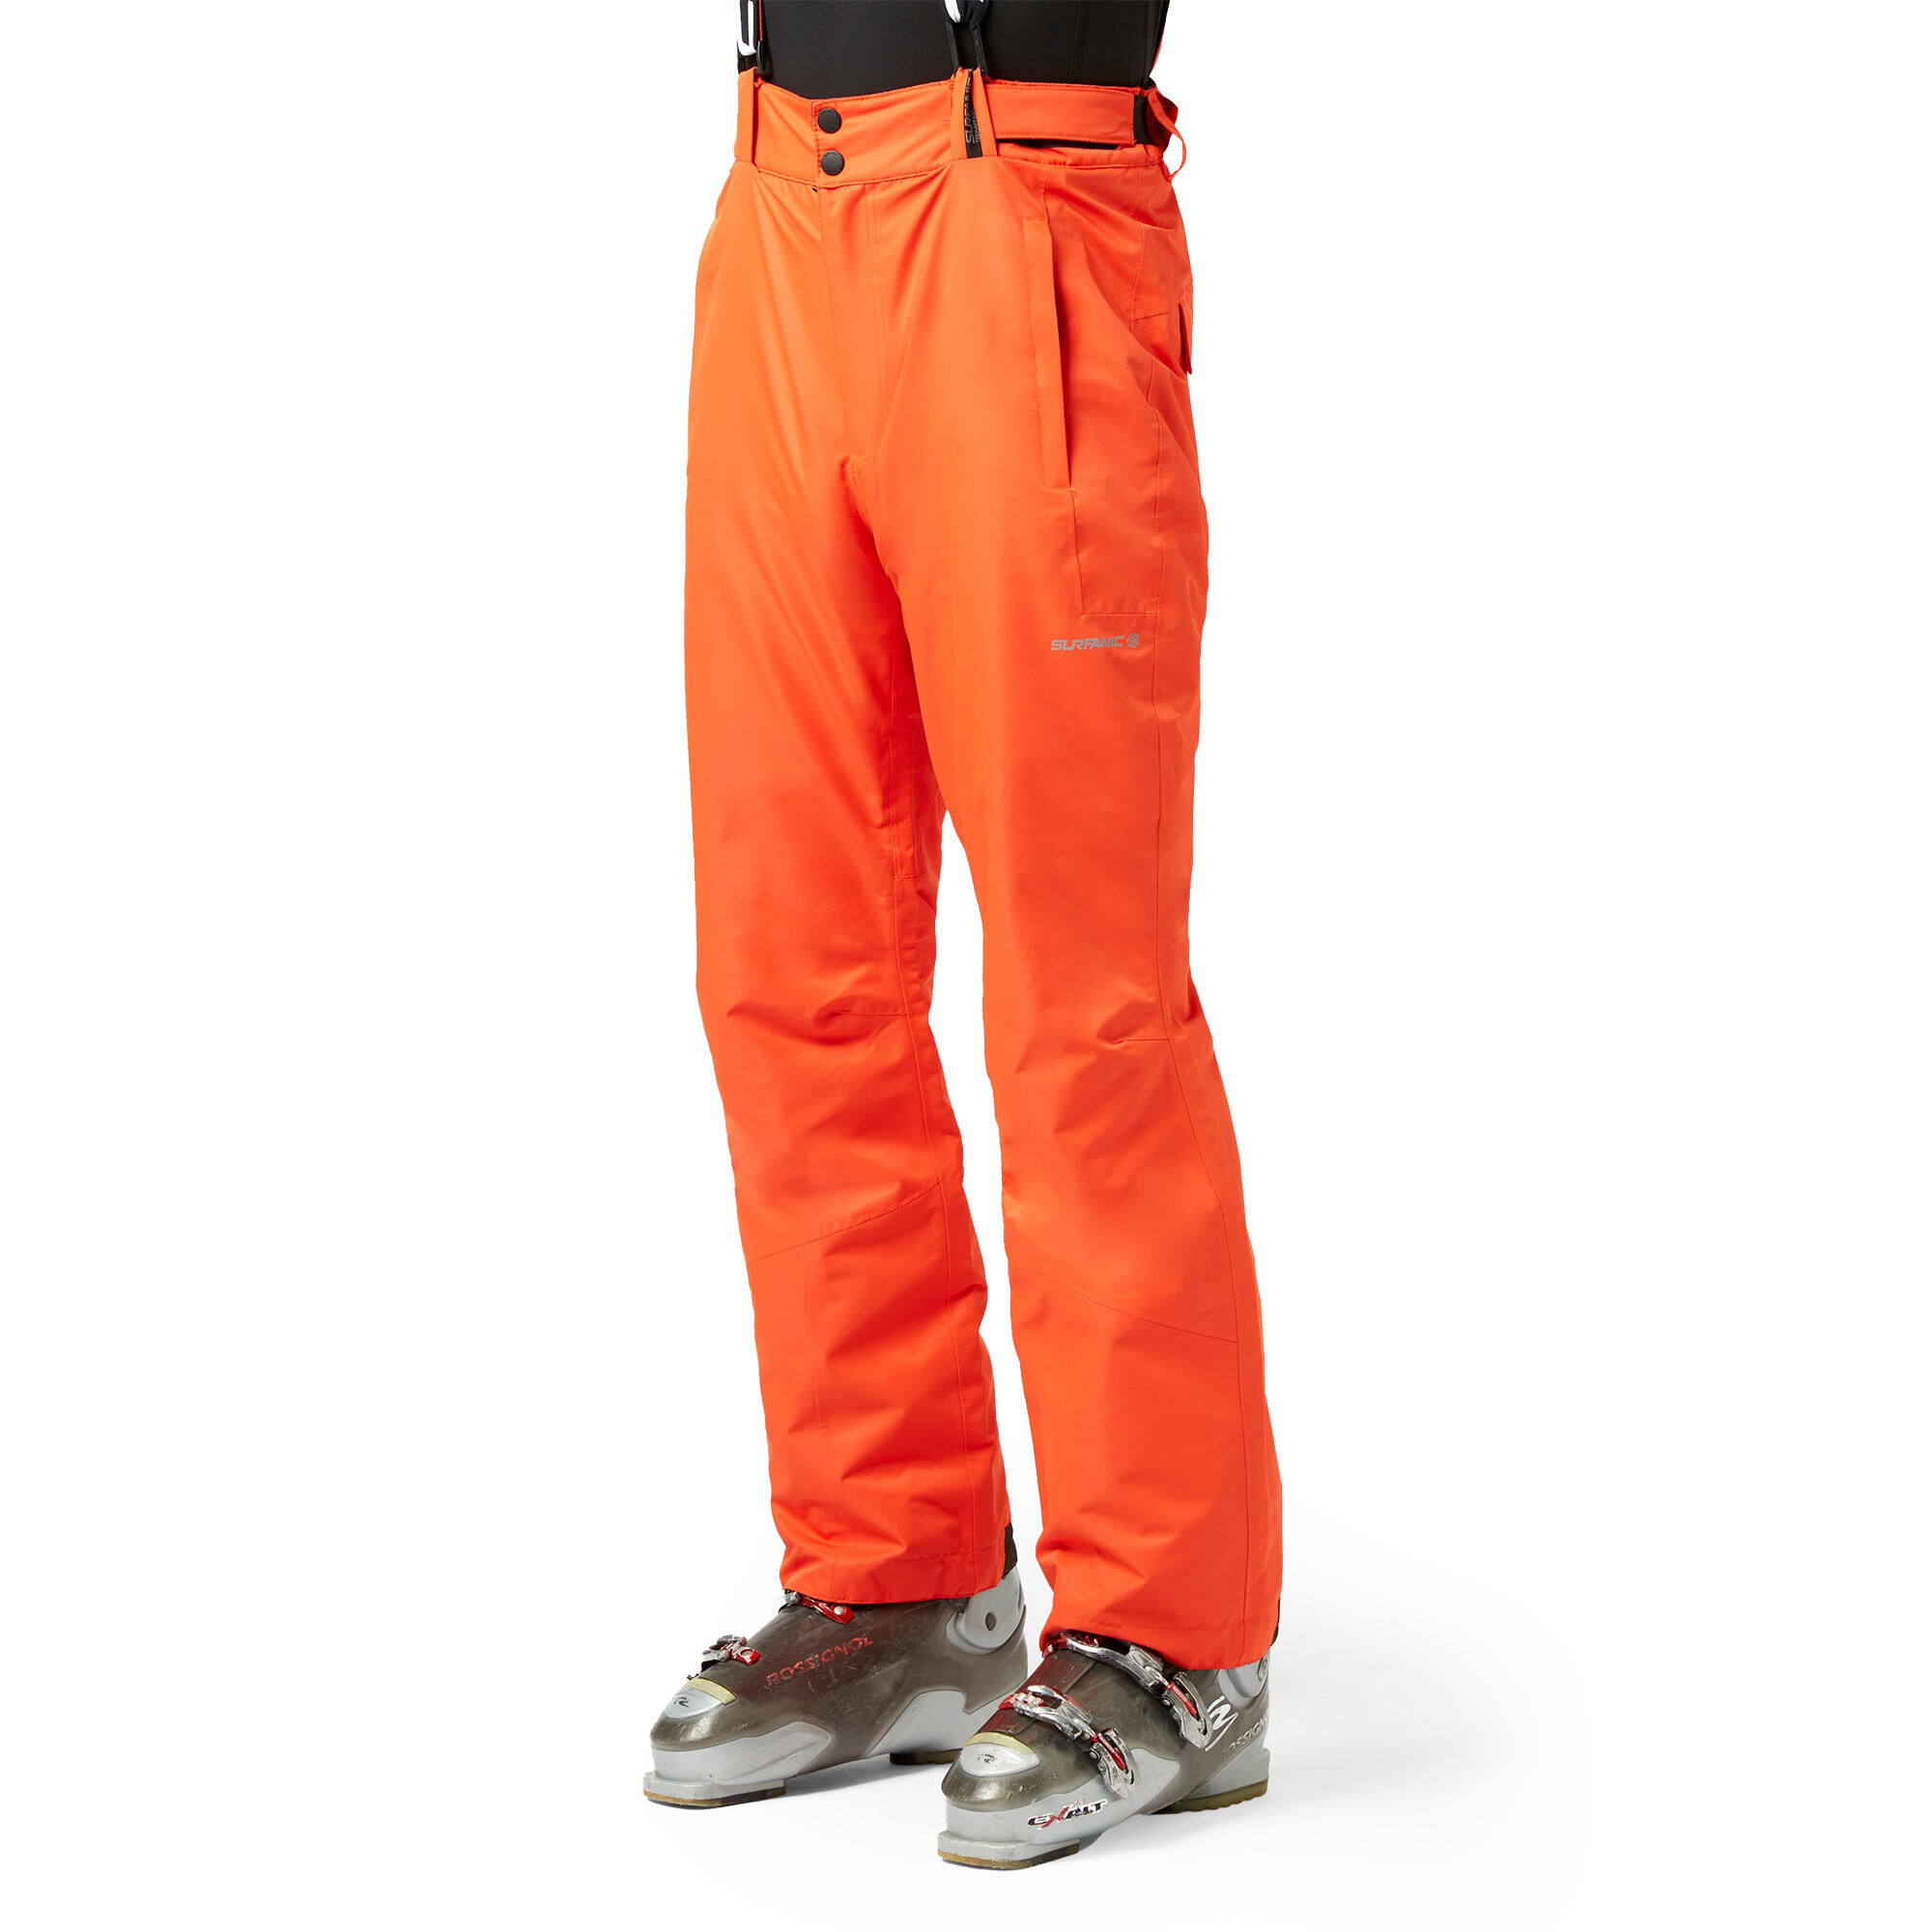 SURFANIC Comrade Surftex Ski Pant Flame Orange